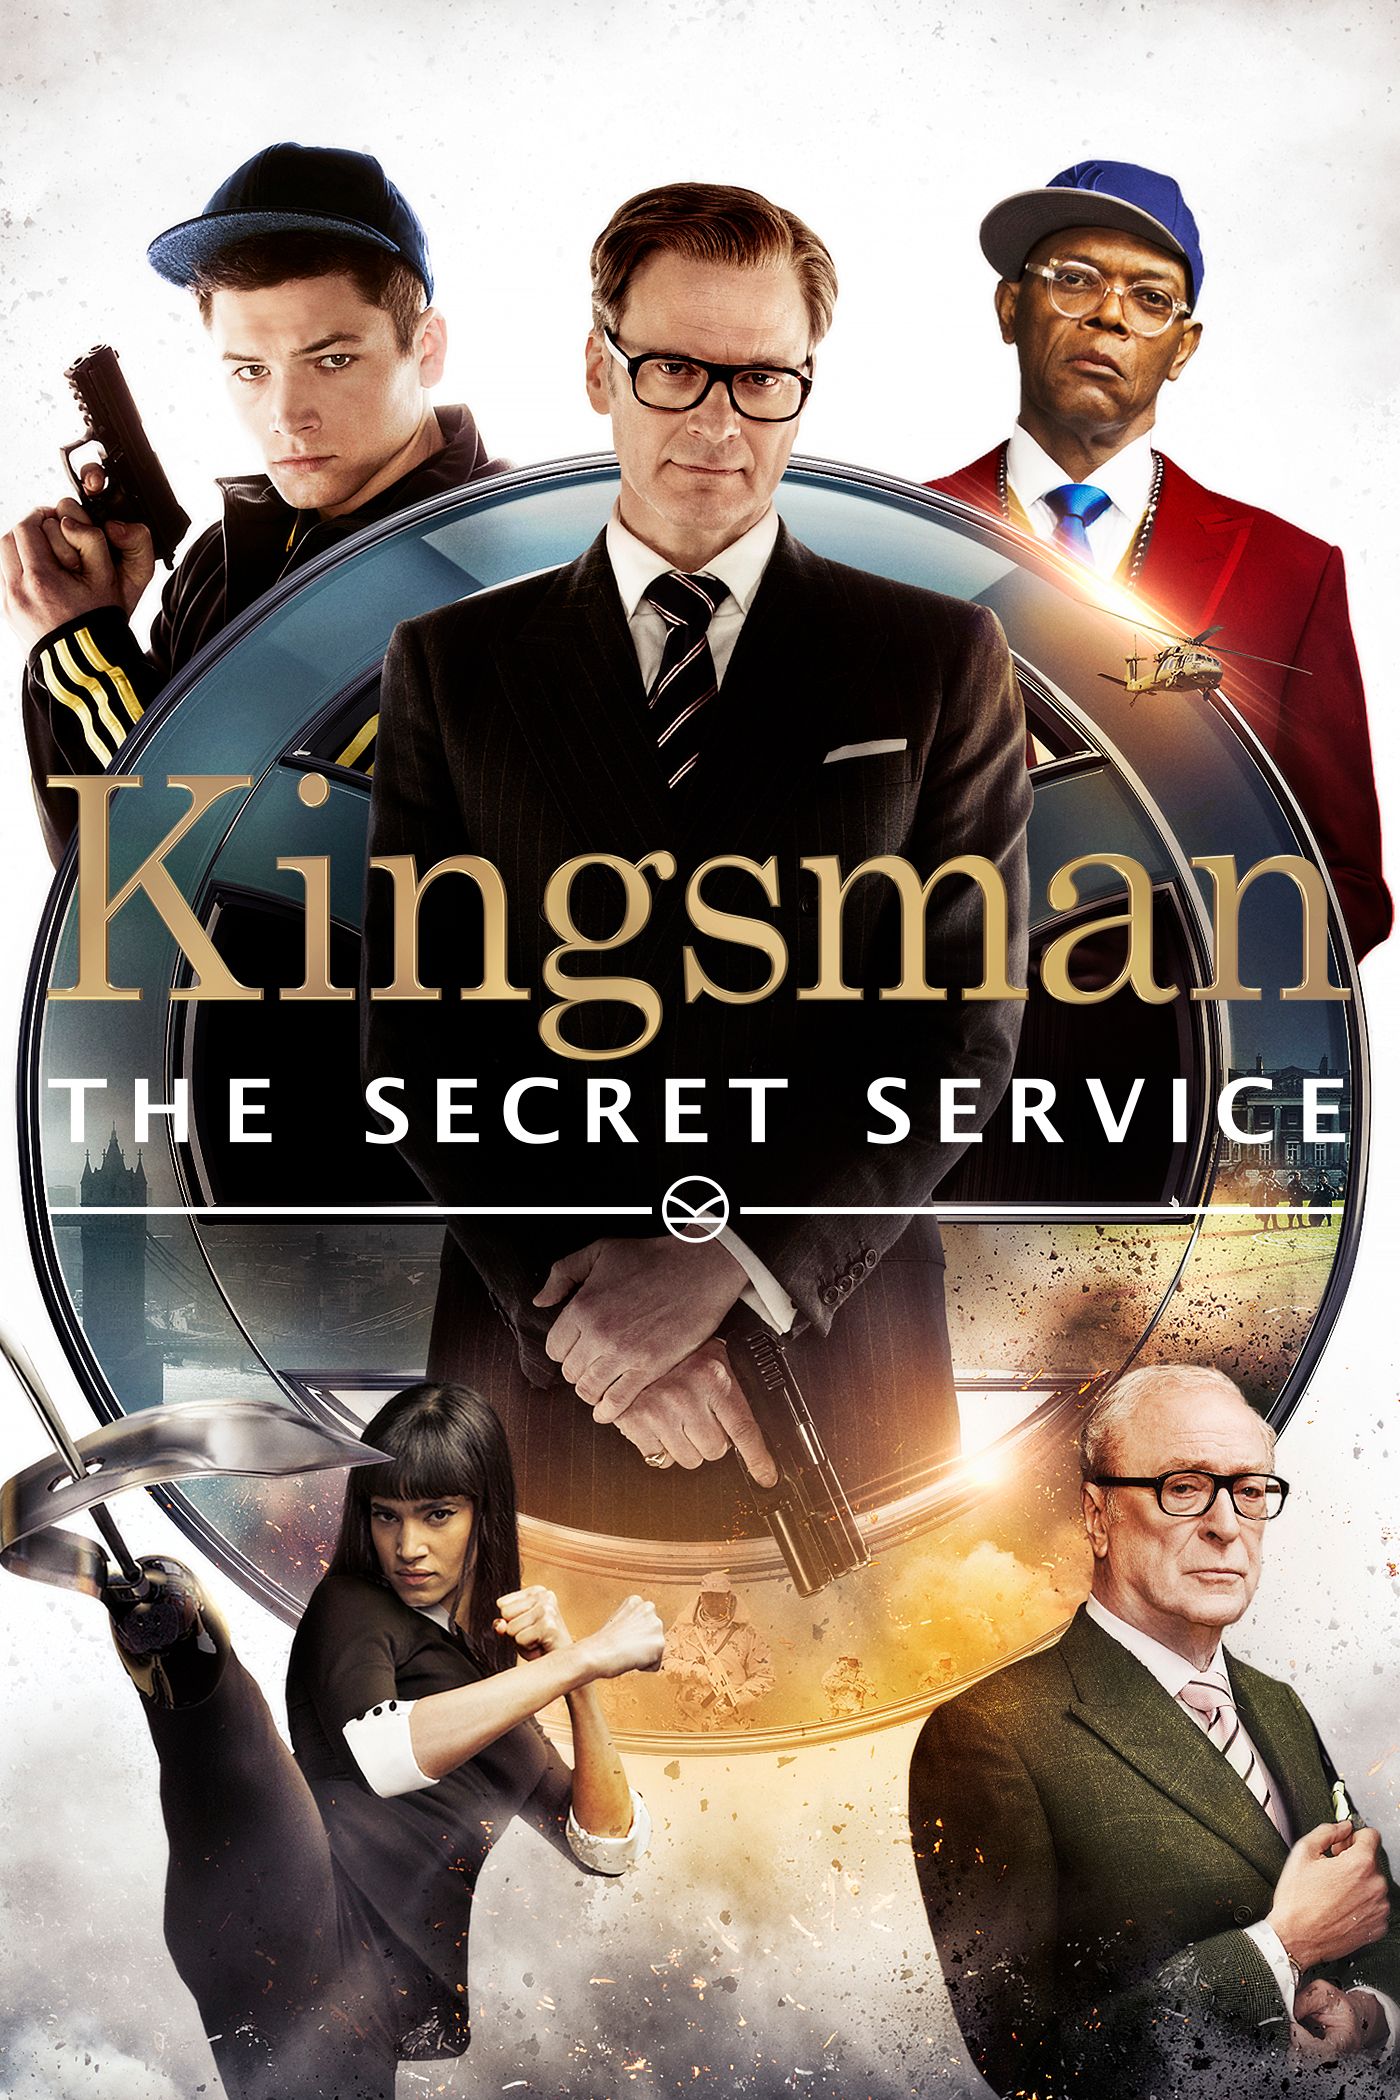 kingsman 2 watch online free in english